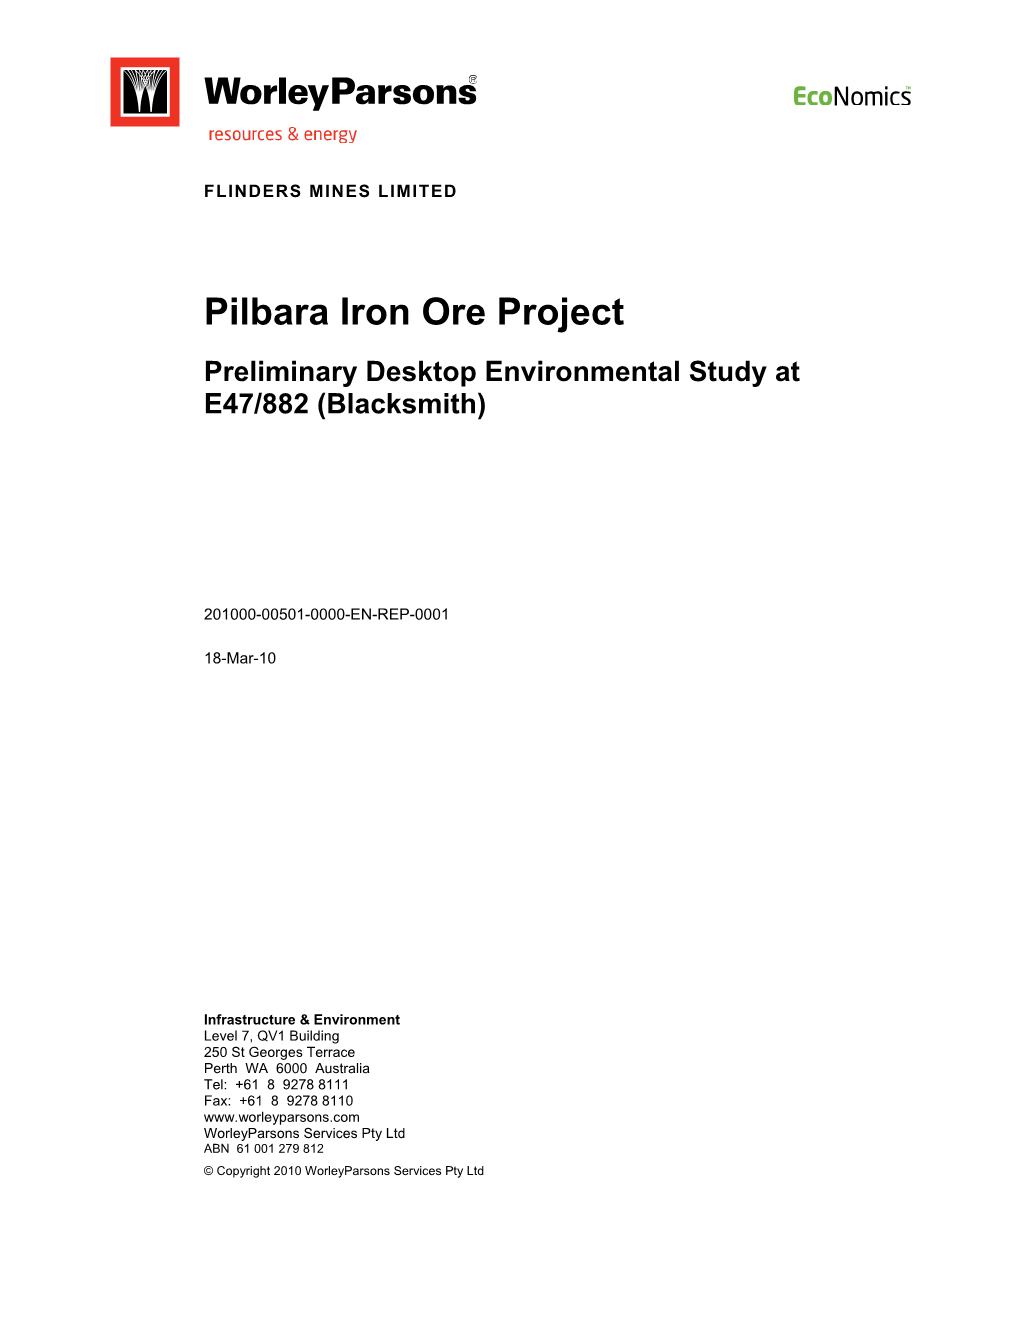 Pilbara Iron Ore Project Preliminary Desktop Environmental Study at E47/882 (Blacksmith)